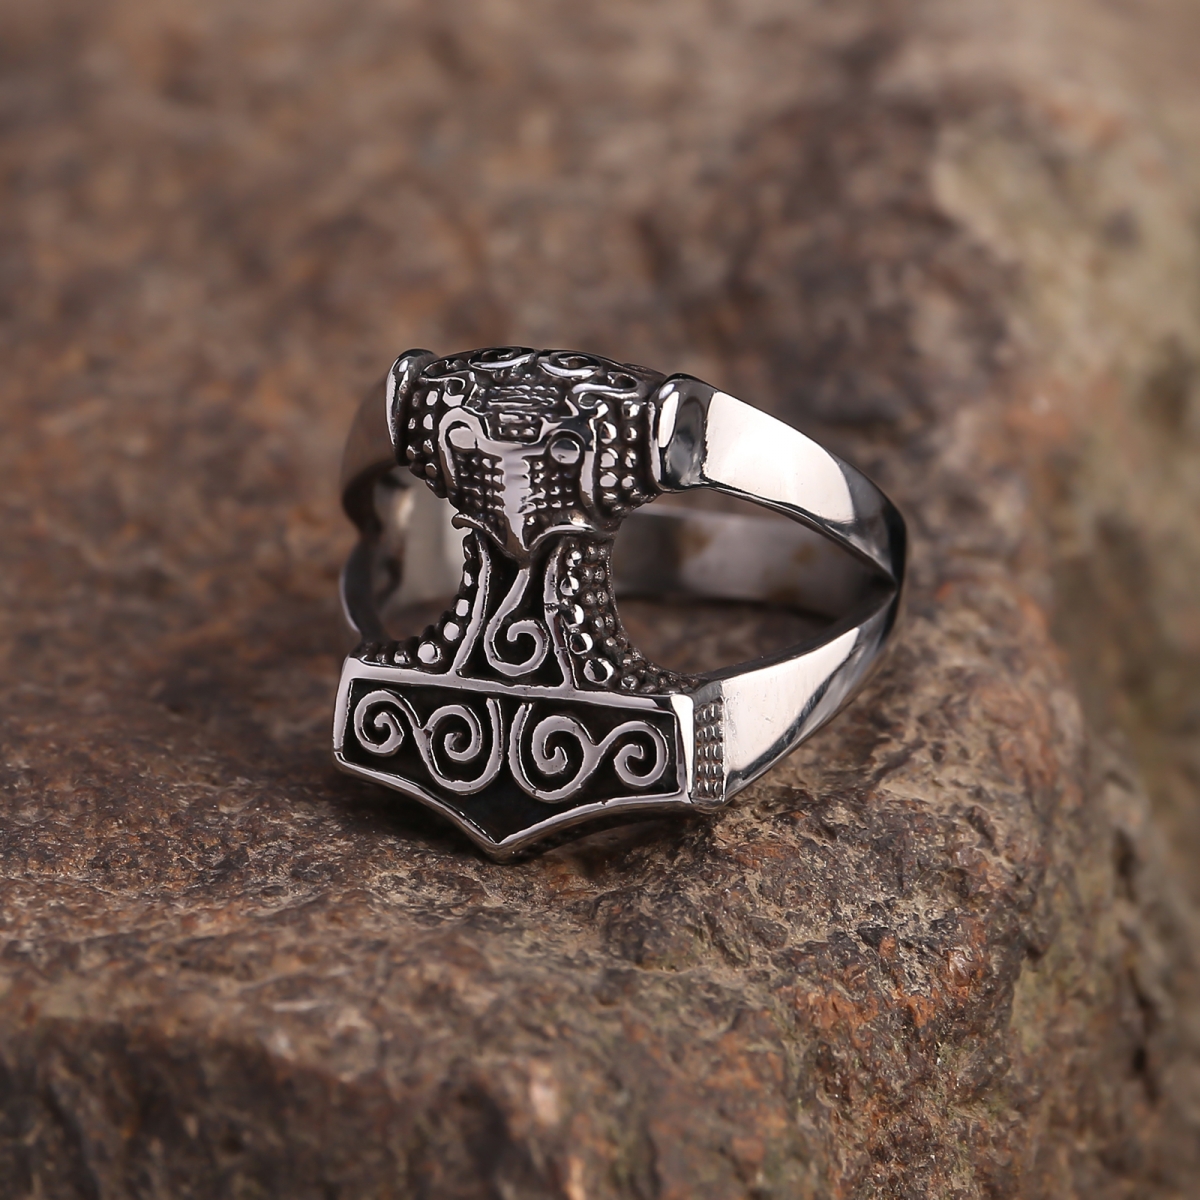 Ring viking direct factory-NORSECOLLECTION- Viking Jewelry,Viking Necklace,Viking Bracelet,Viking Rings,Viking Mugs,Viking Accessories,Viking Crafts